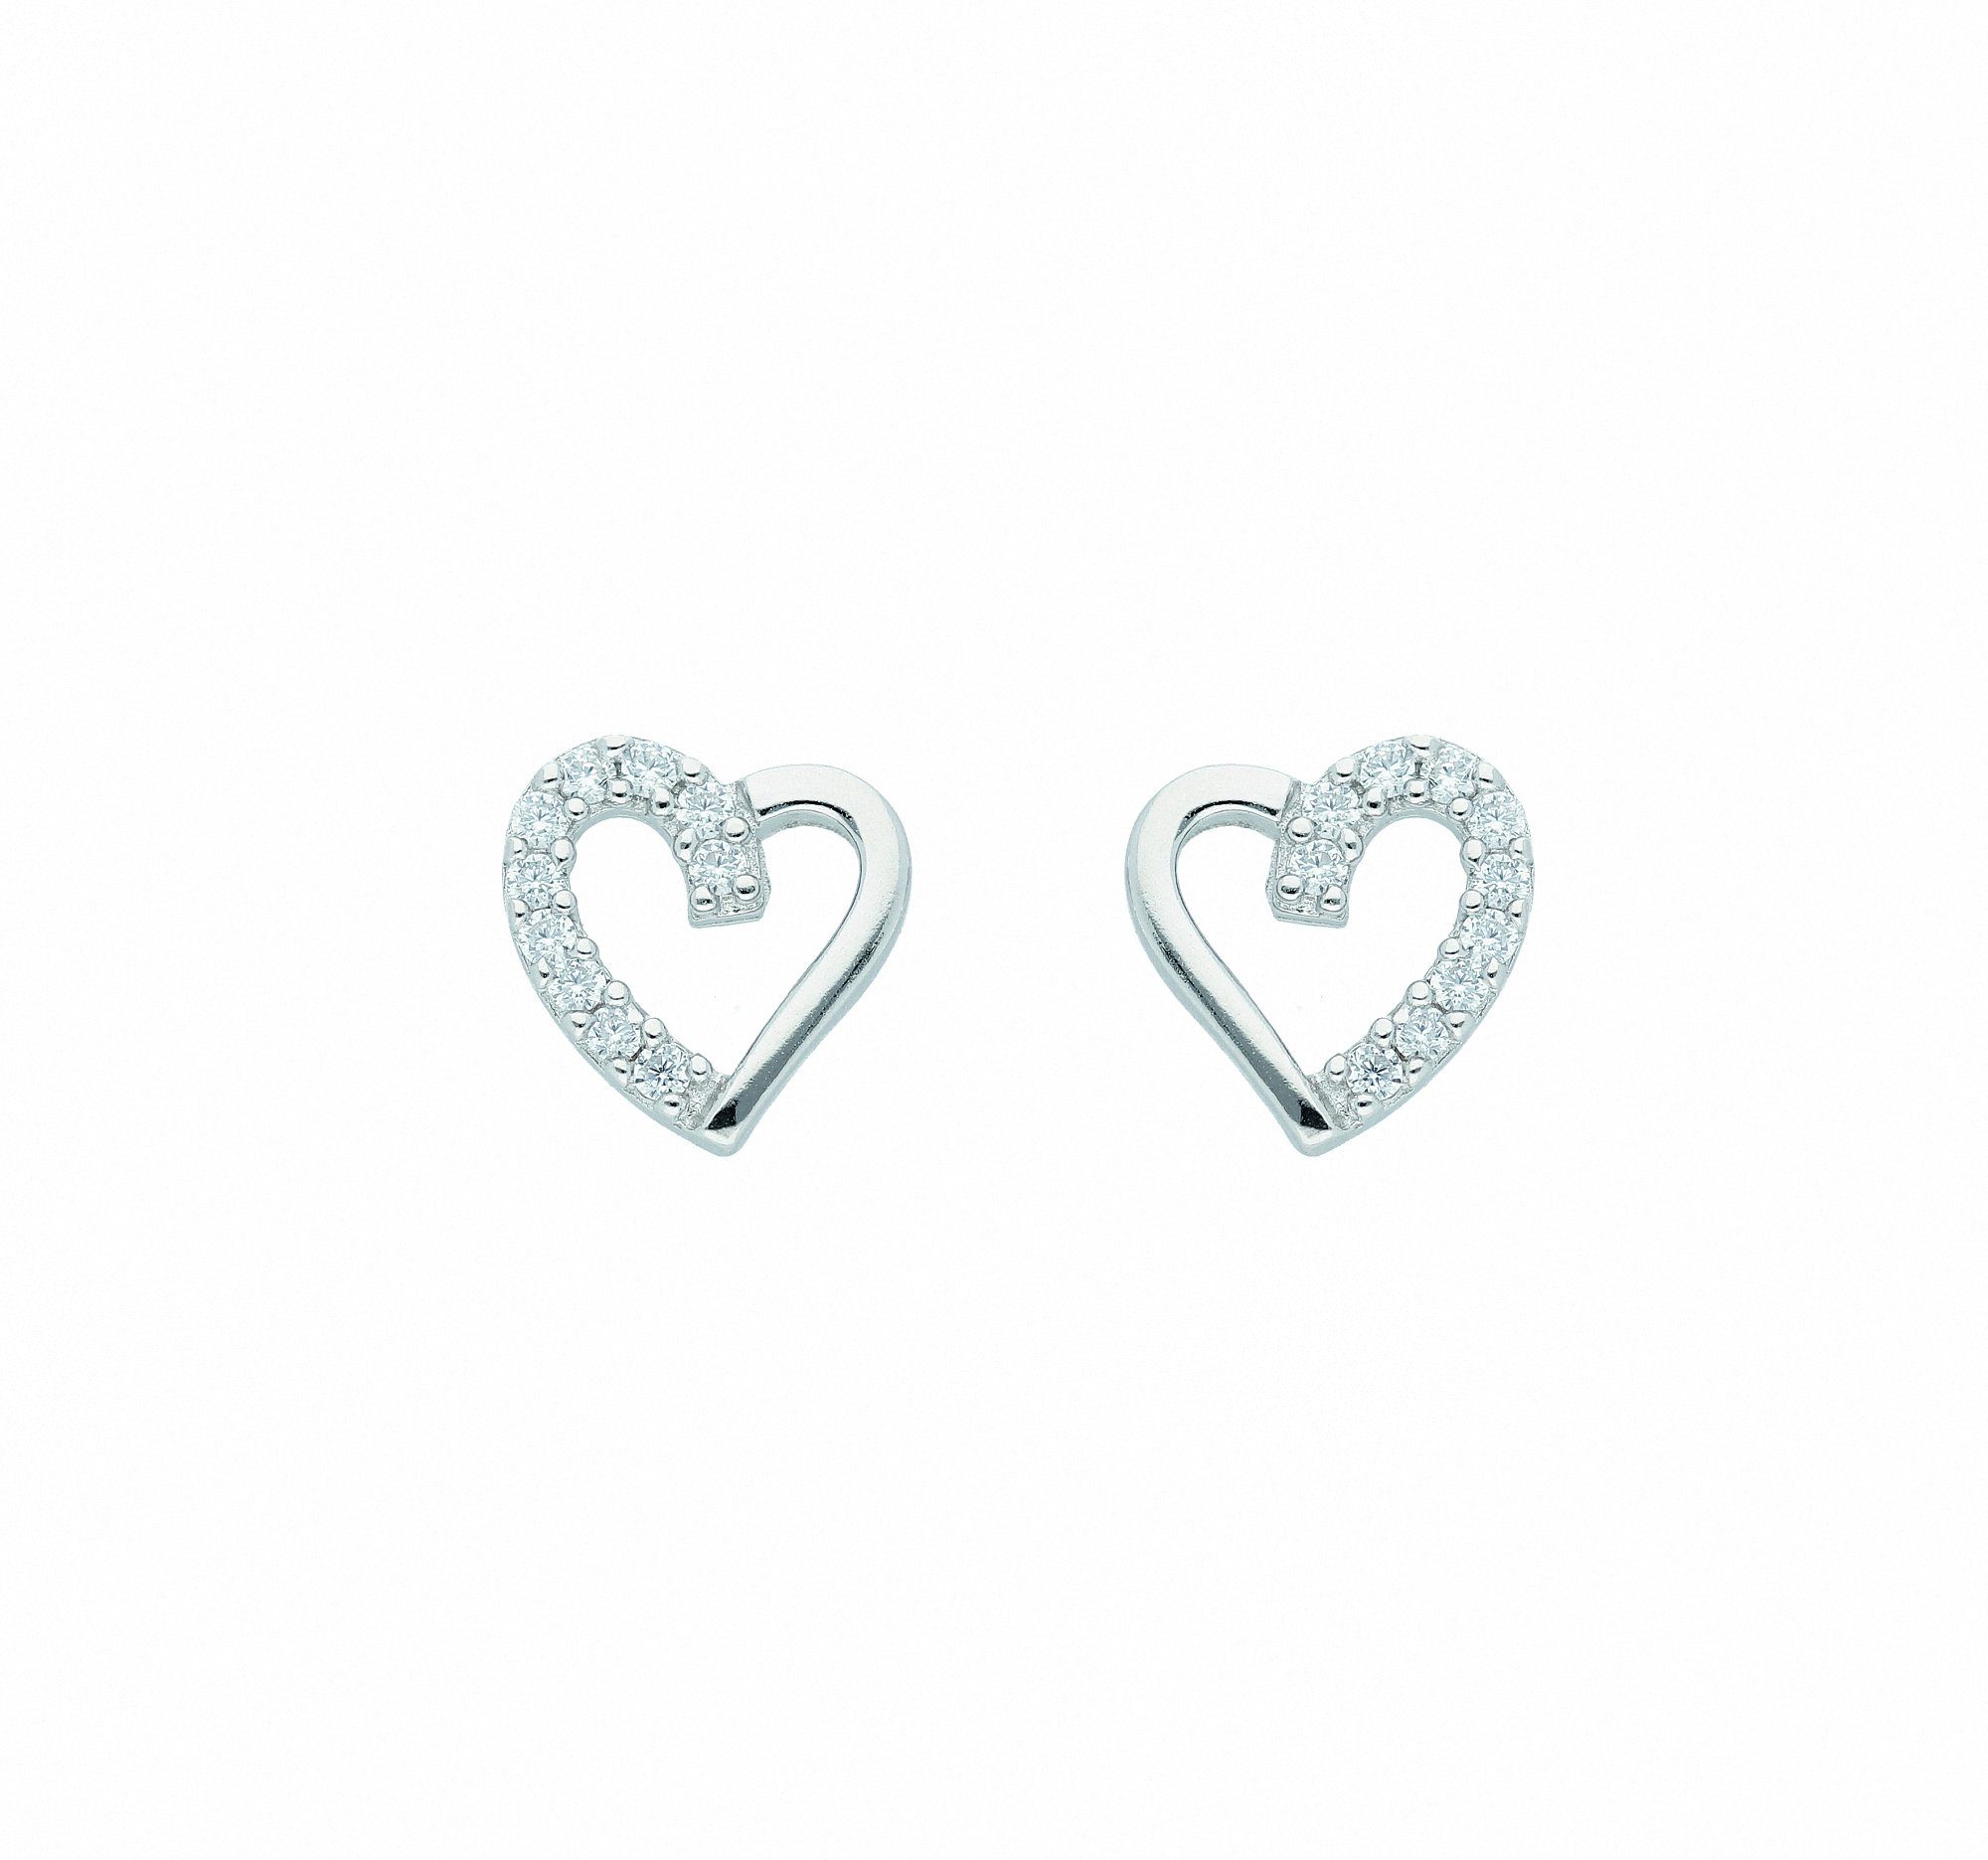 Damen Schmuck Adelia´s Paar Ohrhänger 1 Paar 925 Silber Ohrringe / Ohrstecker Herz mit Zirkonia, 925 Sterling Silber Silberschmu